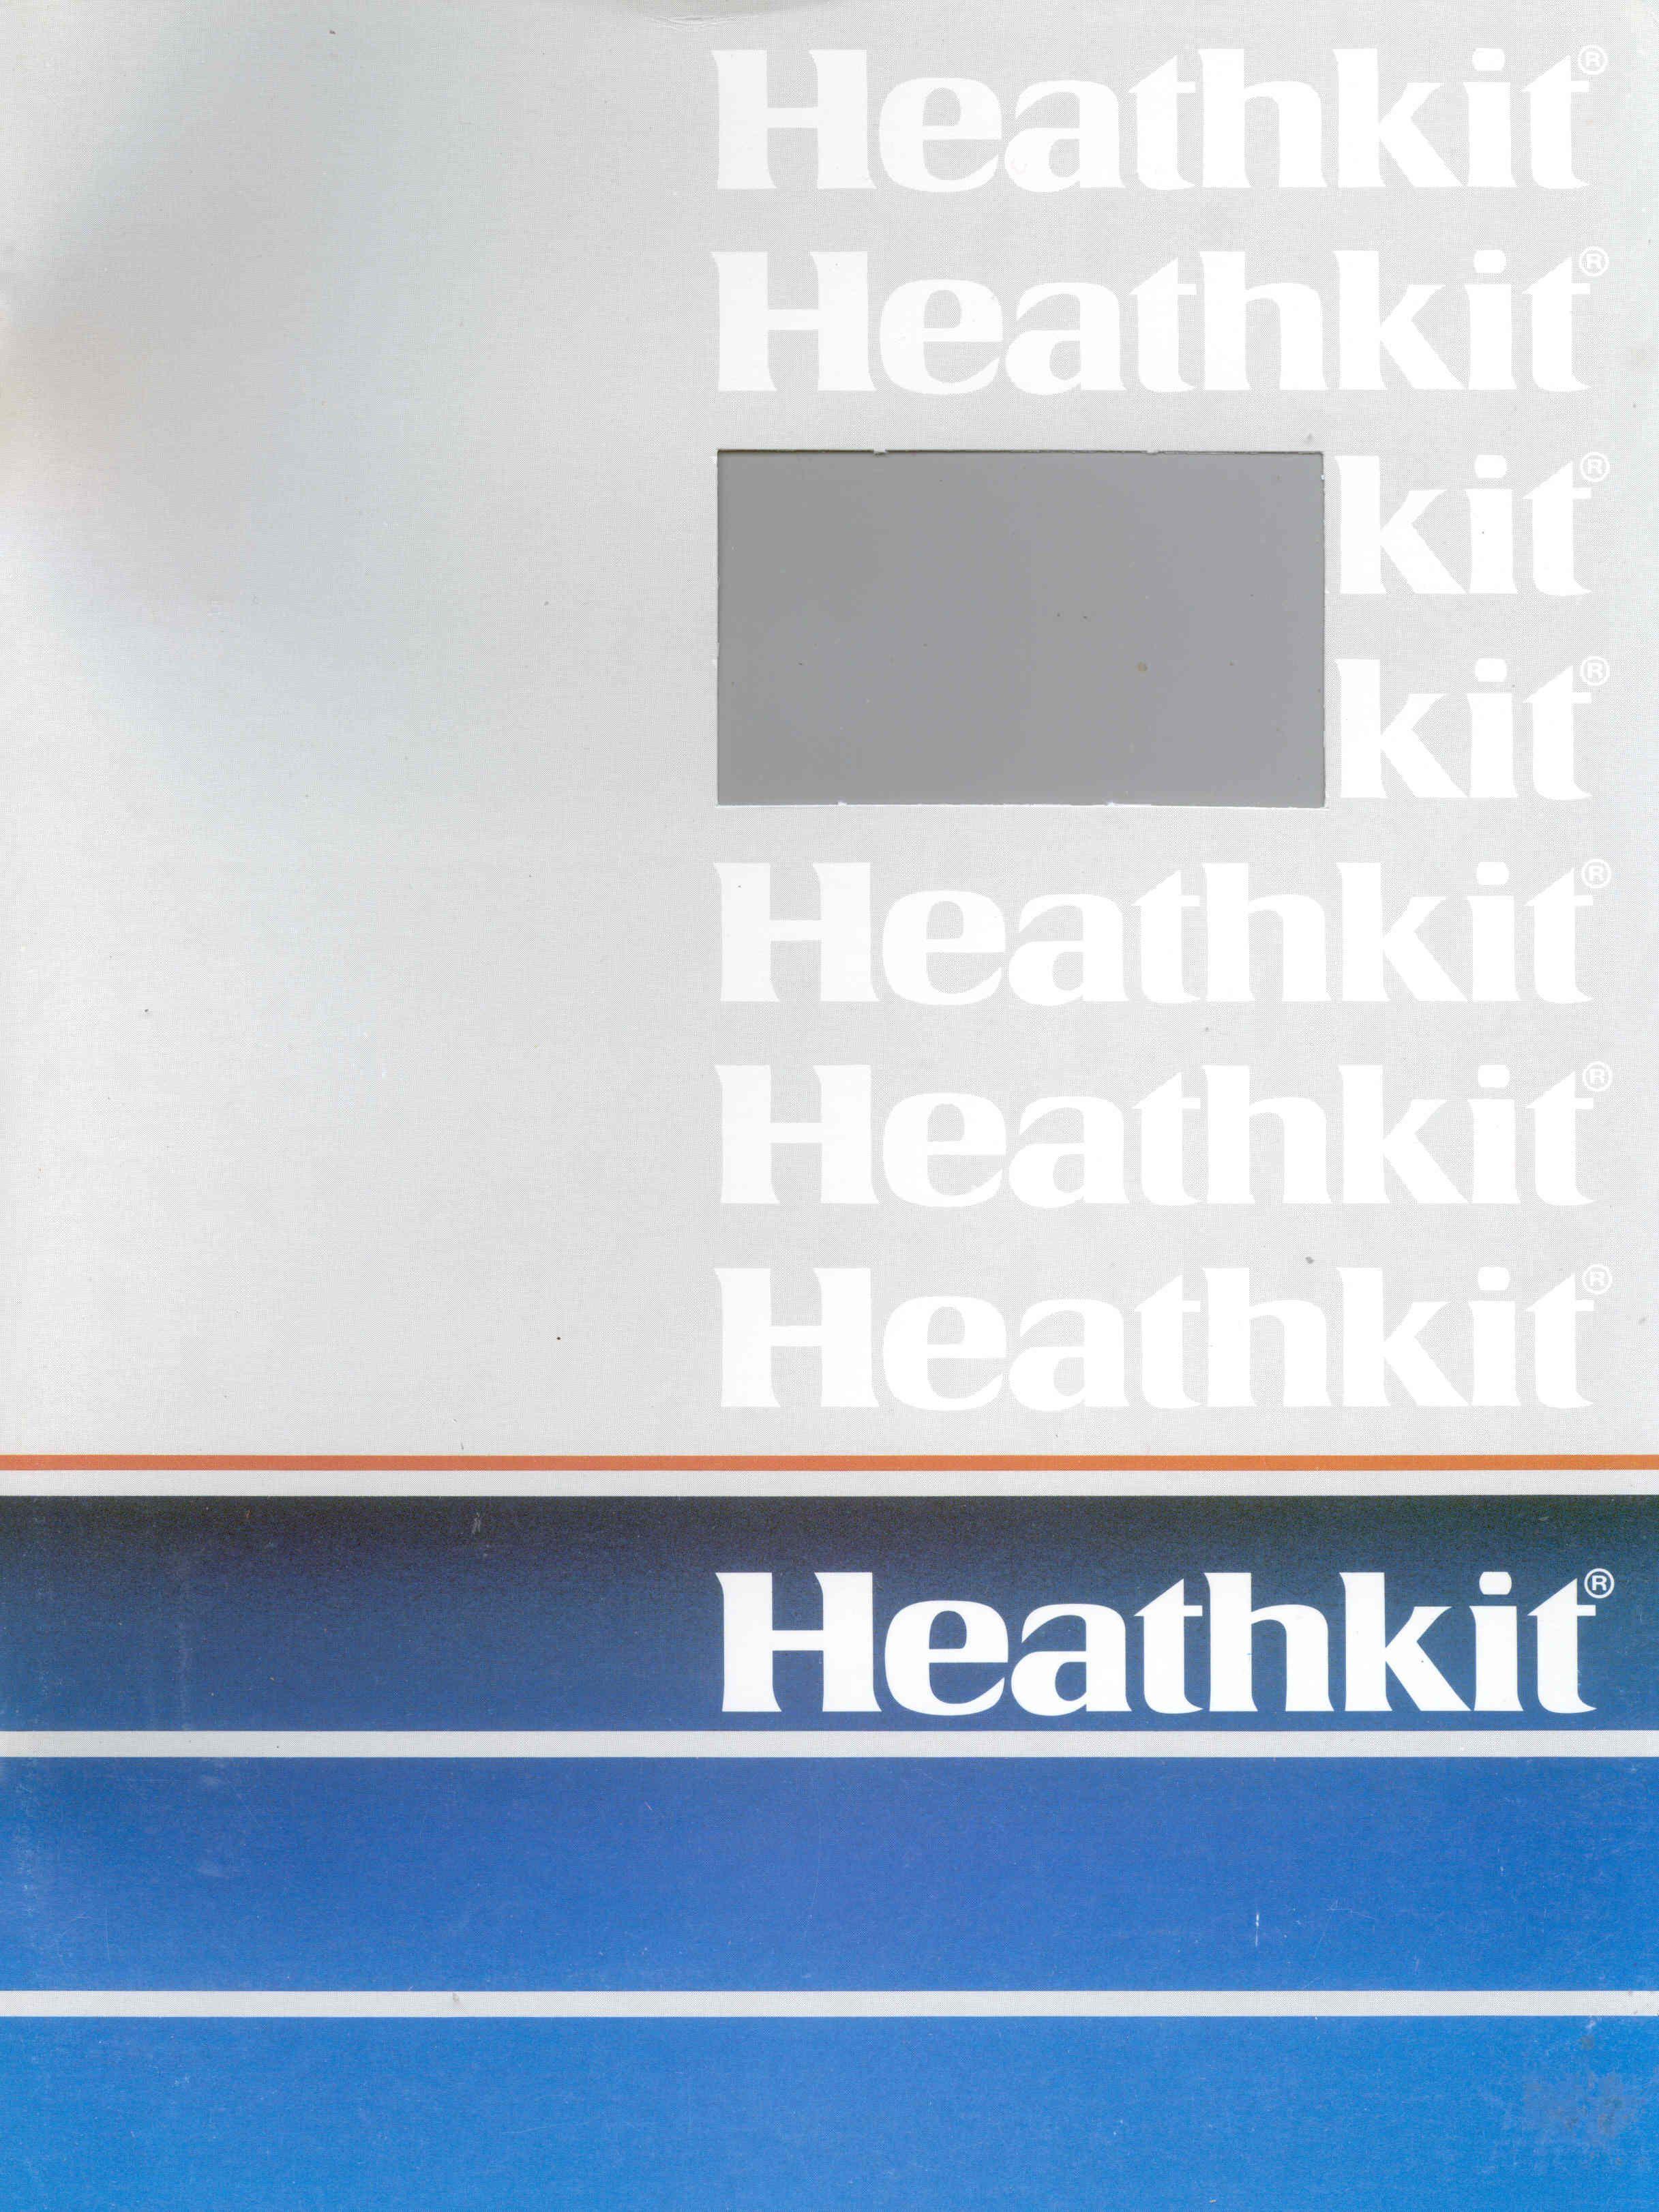 Heathkit Logo - Heathkit Covers